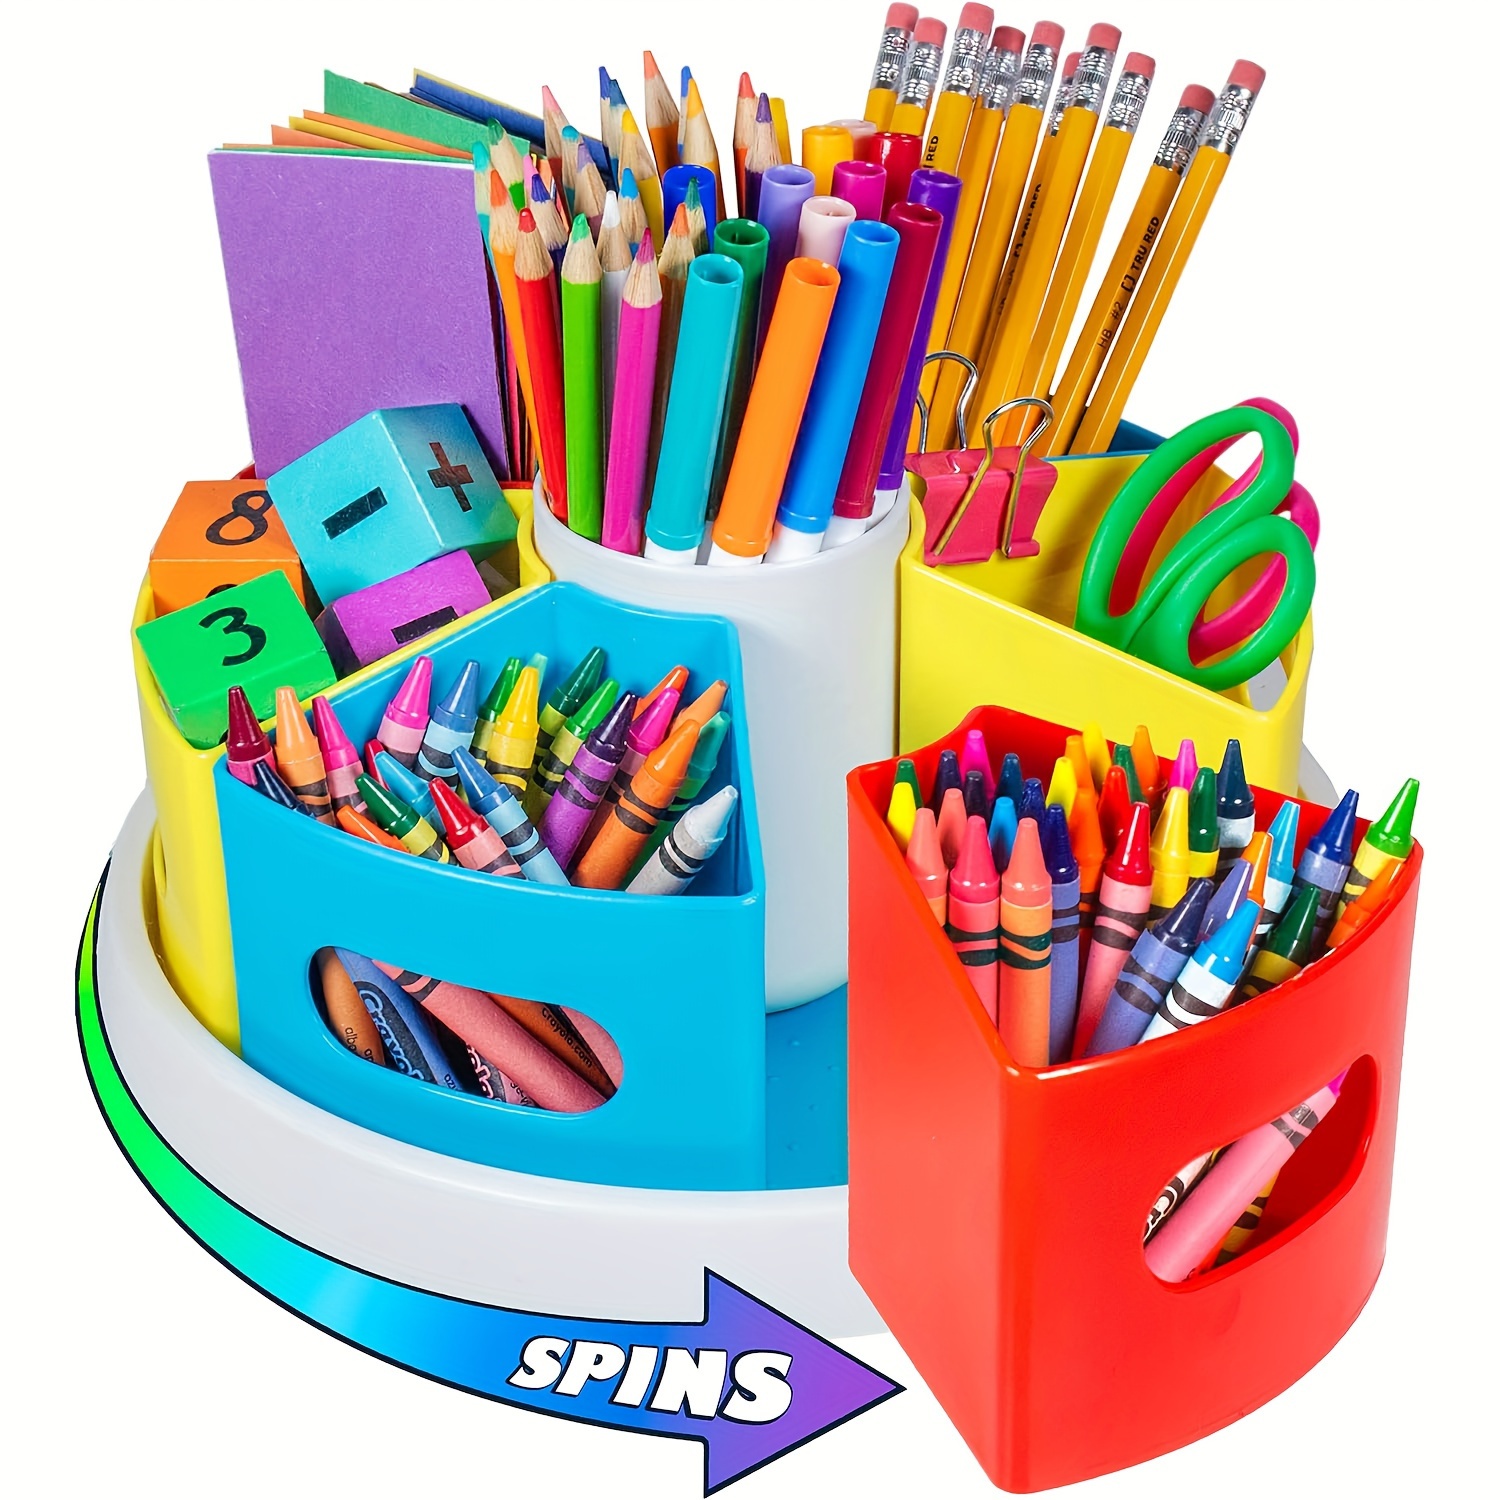 

1pc Plastic 360° Rotating Desk Organizer, Divided Storage Box For Art Supplies, Colorful Pencils, Desktop Crayon & Marker Holder, Home School Classroom Organization Tool